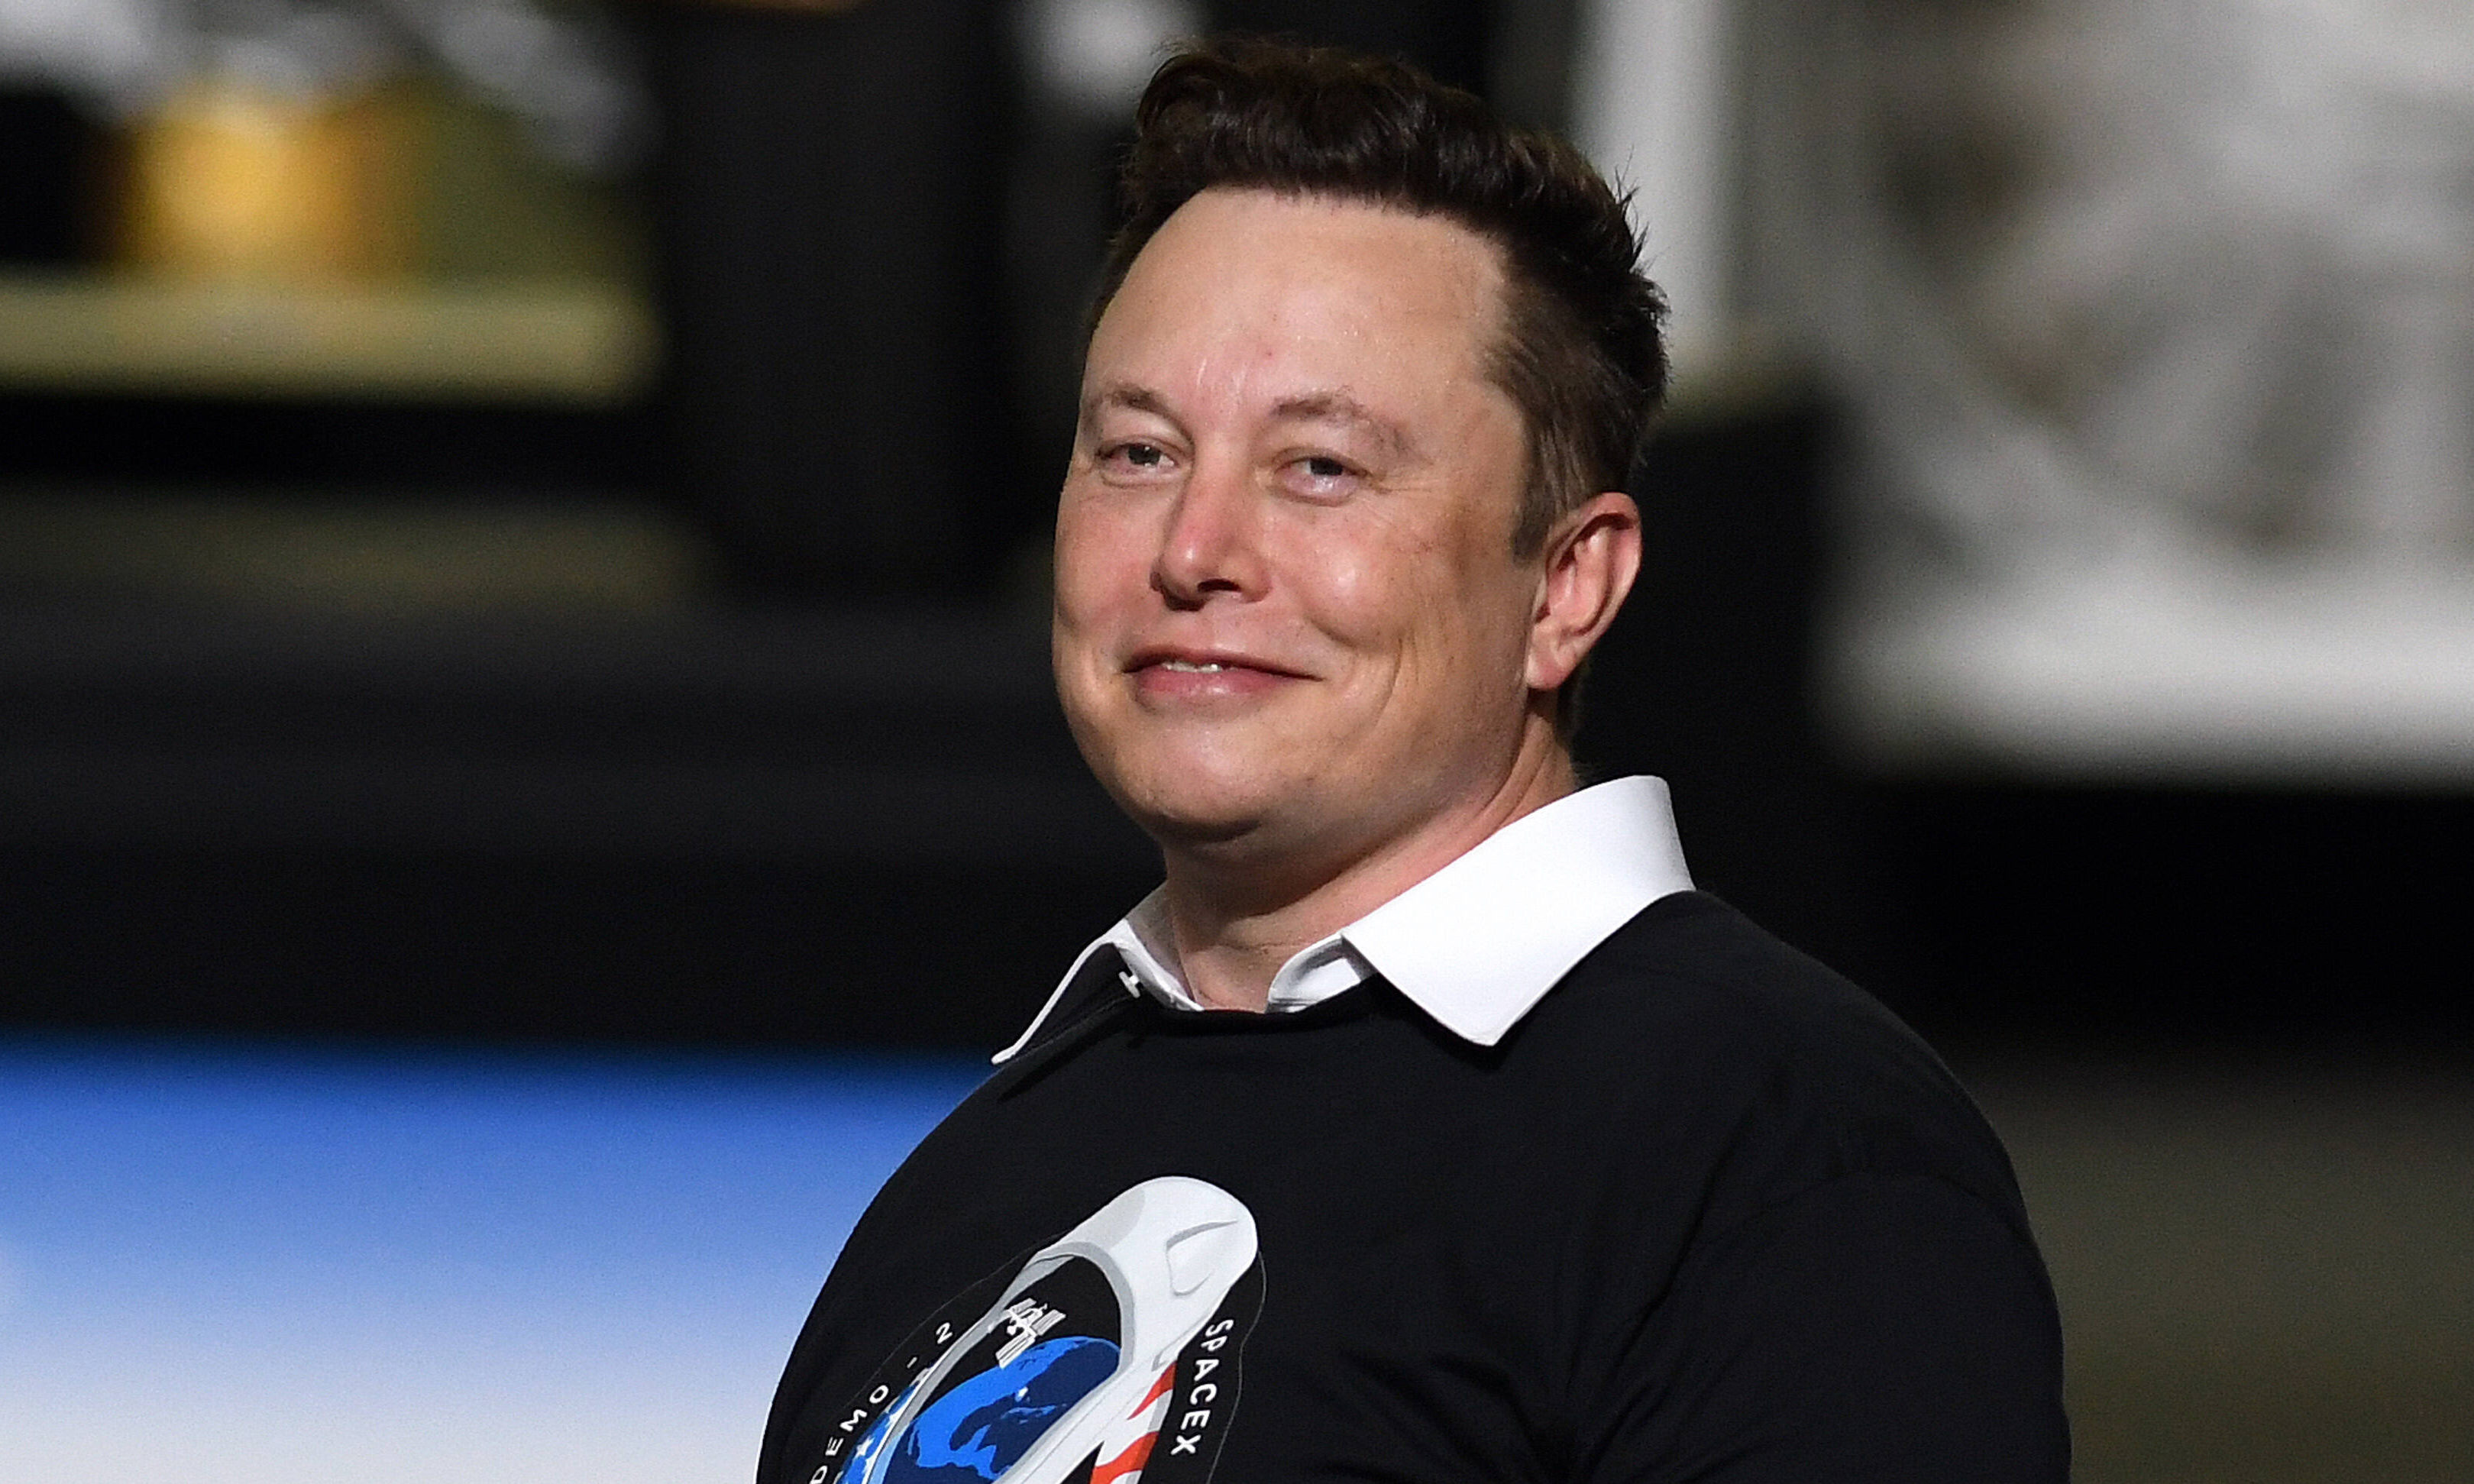 Elon Musk ist reichster Mensch der Welt